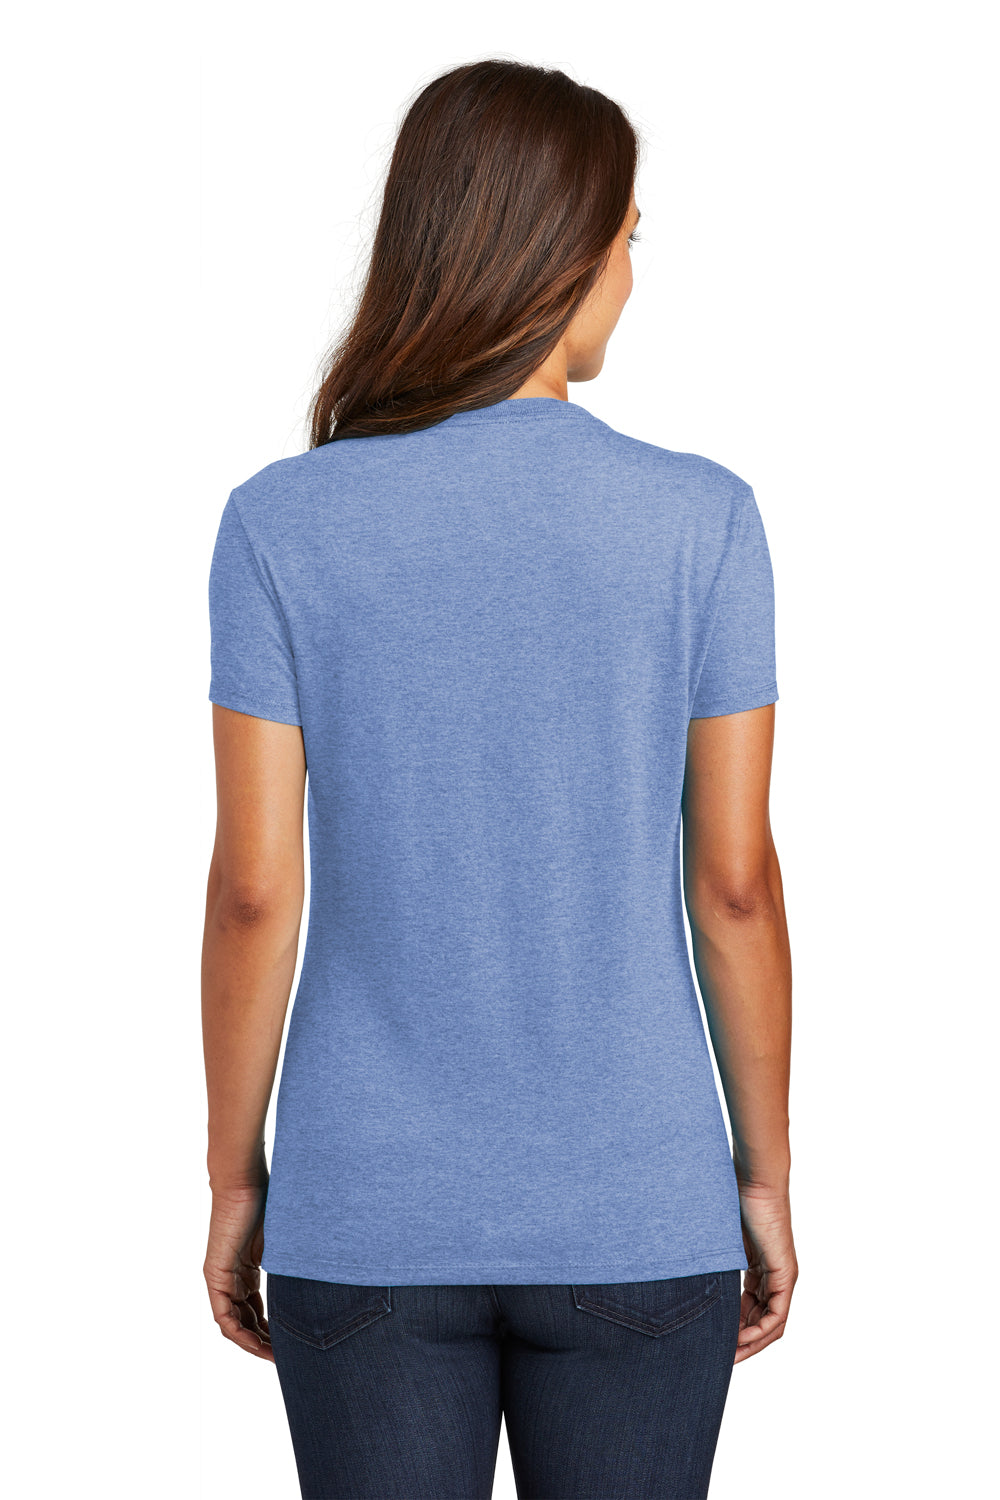 District DM130L Womens Perfect Tri Short Sleeve Crewneck T-Shirt Maritime Blue Frost Back